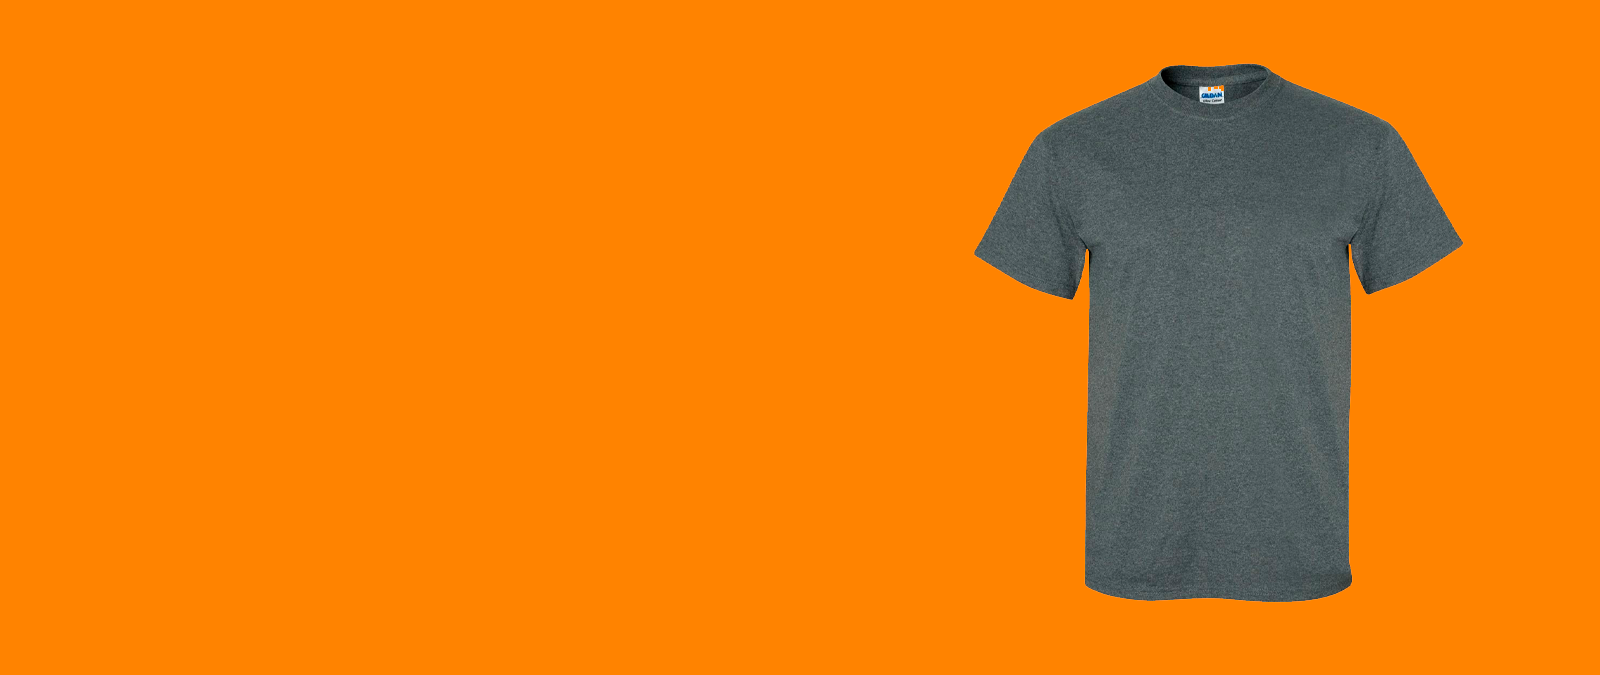 Gray crew neck t-shirt displayed on an orange background.